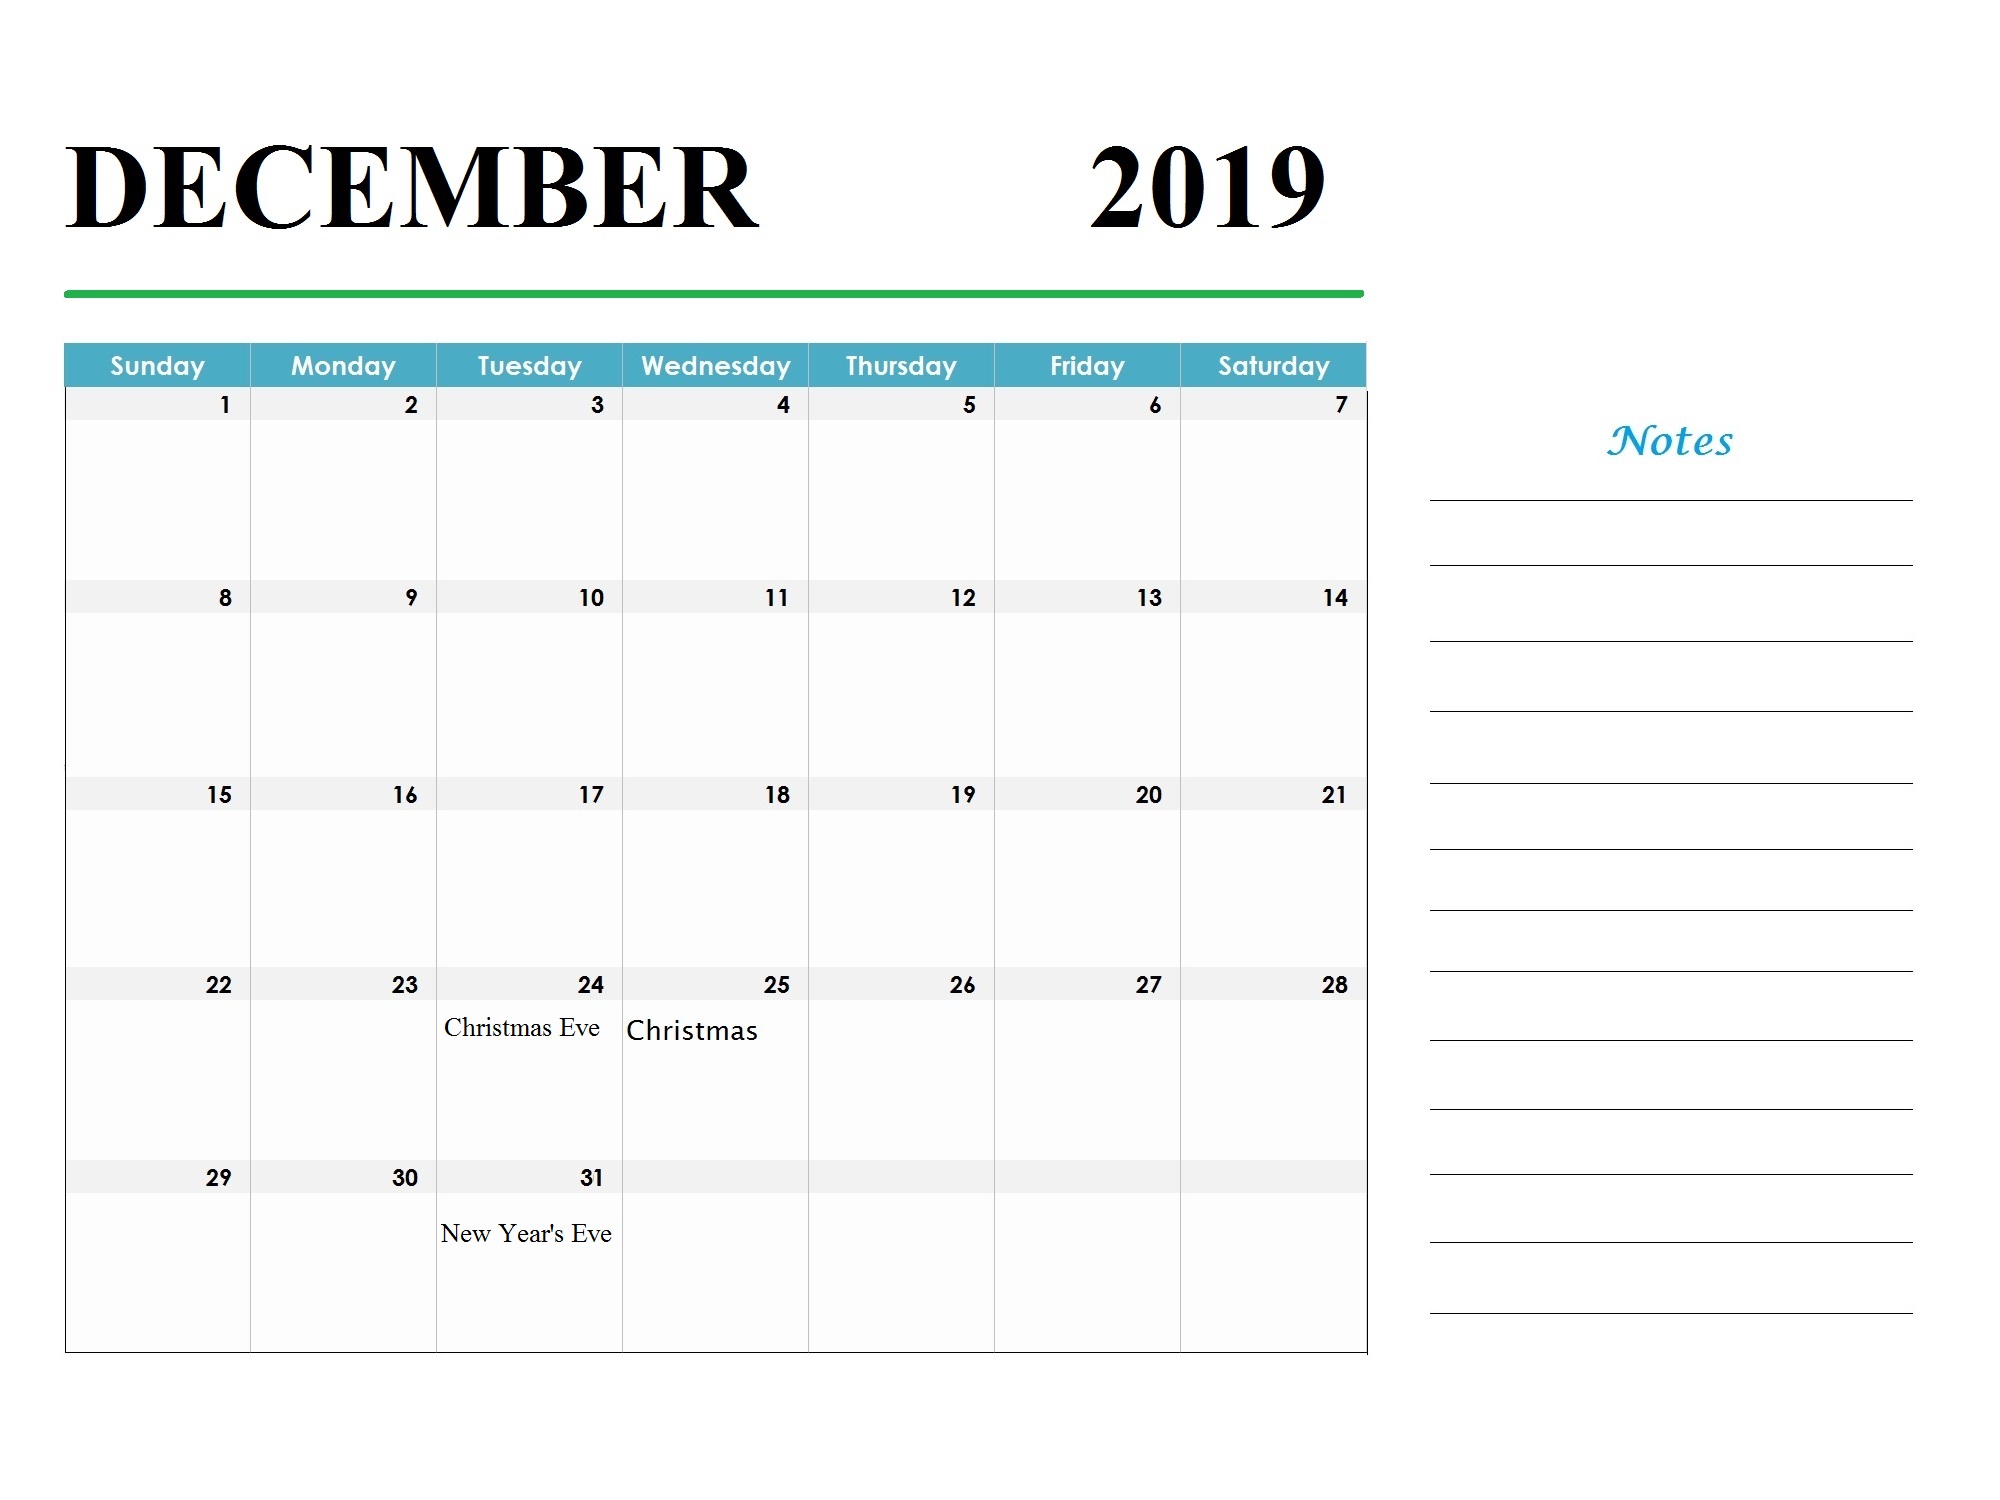 December 2019 Holidays Calendar Template